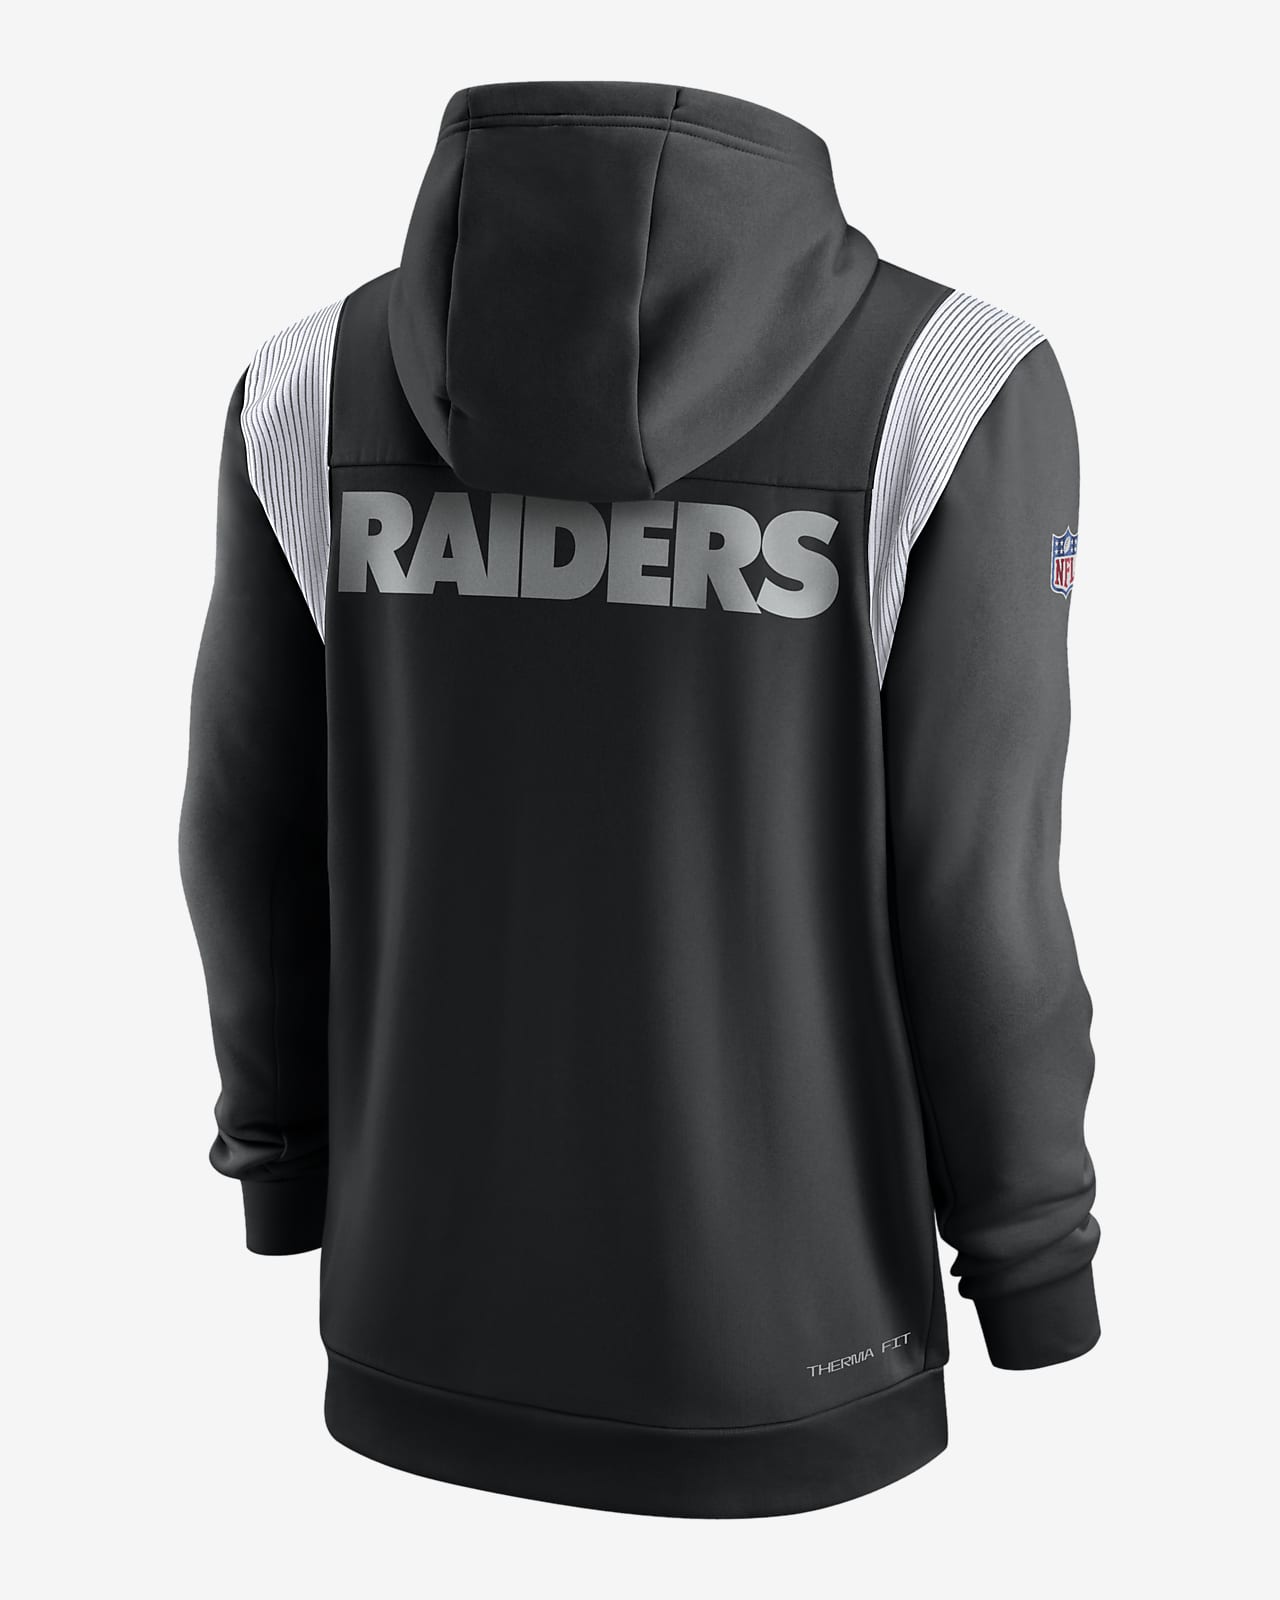 raiders sweatshirt nike